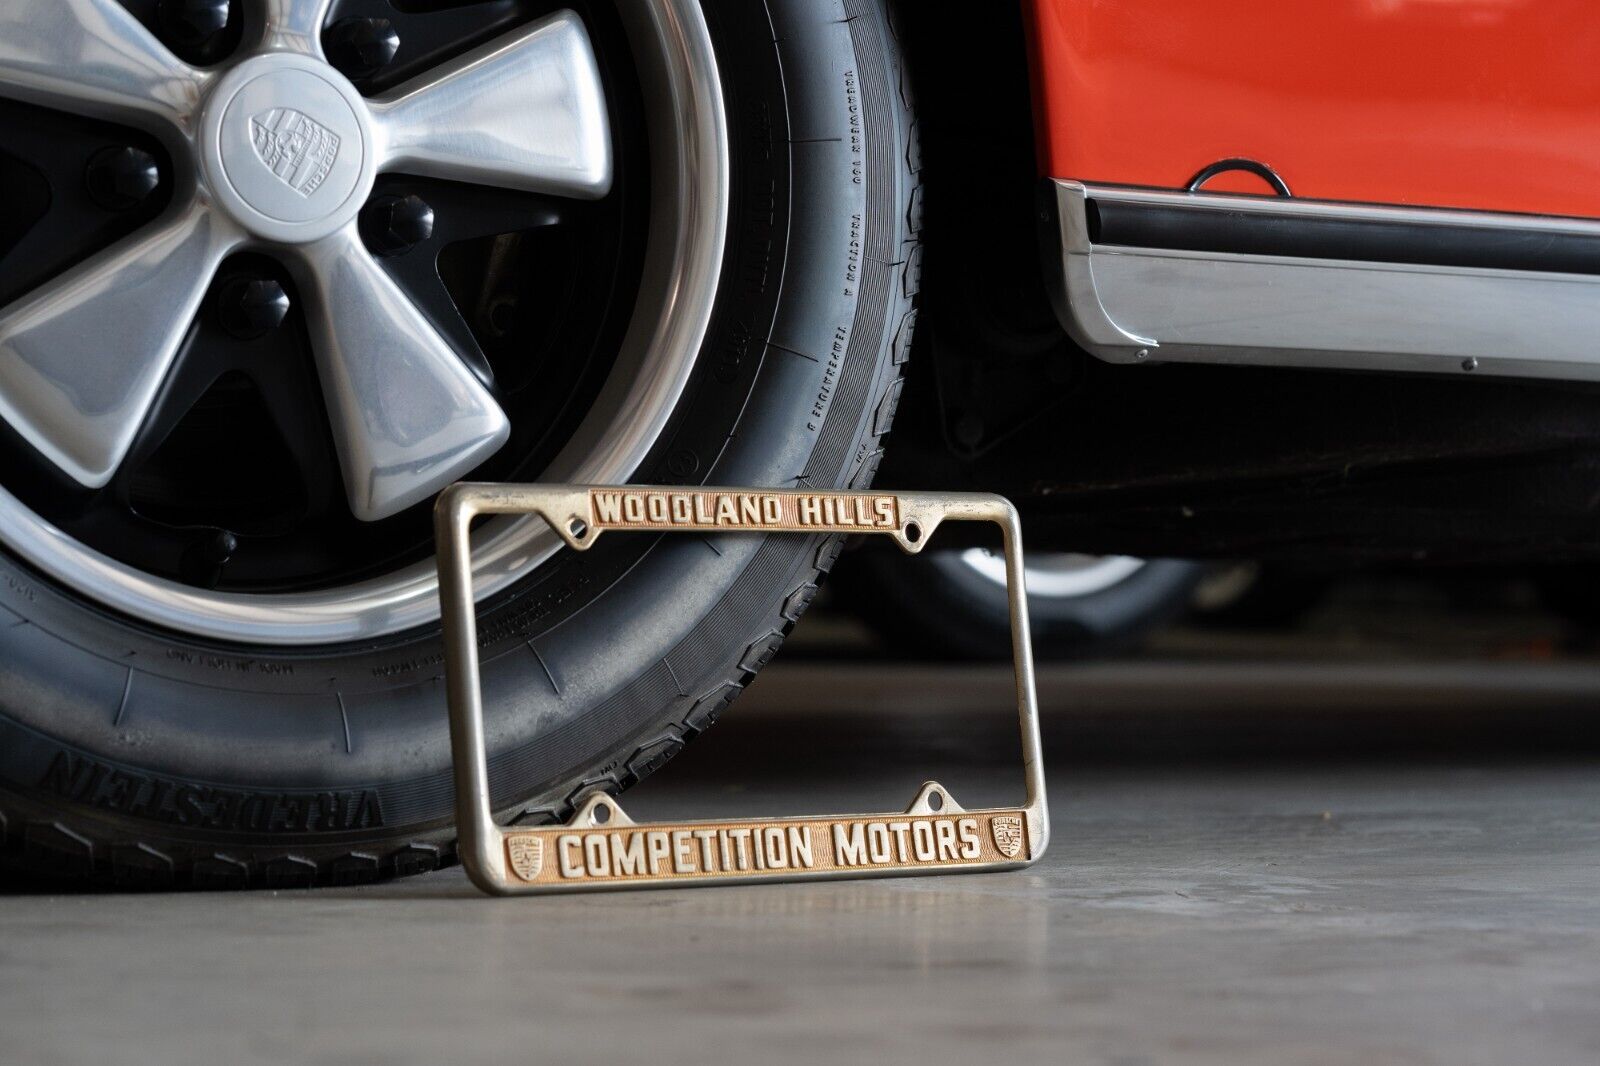 Authentic Competition Motors Porsche Woodland Hills Gold License Plate Frame